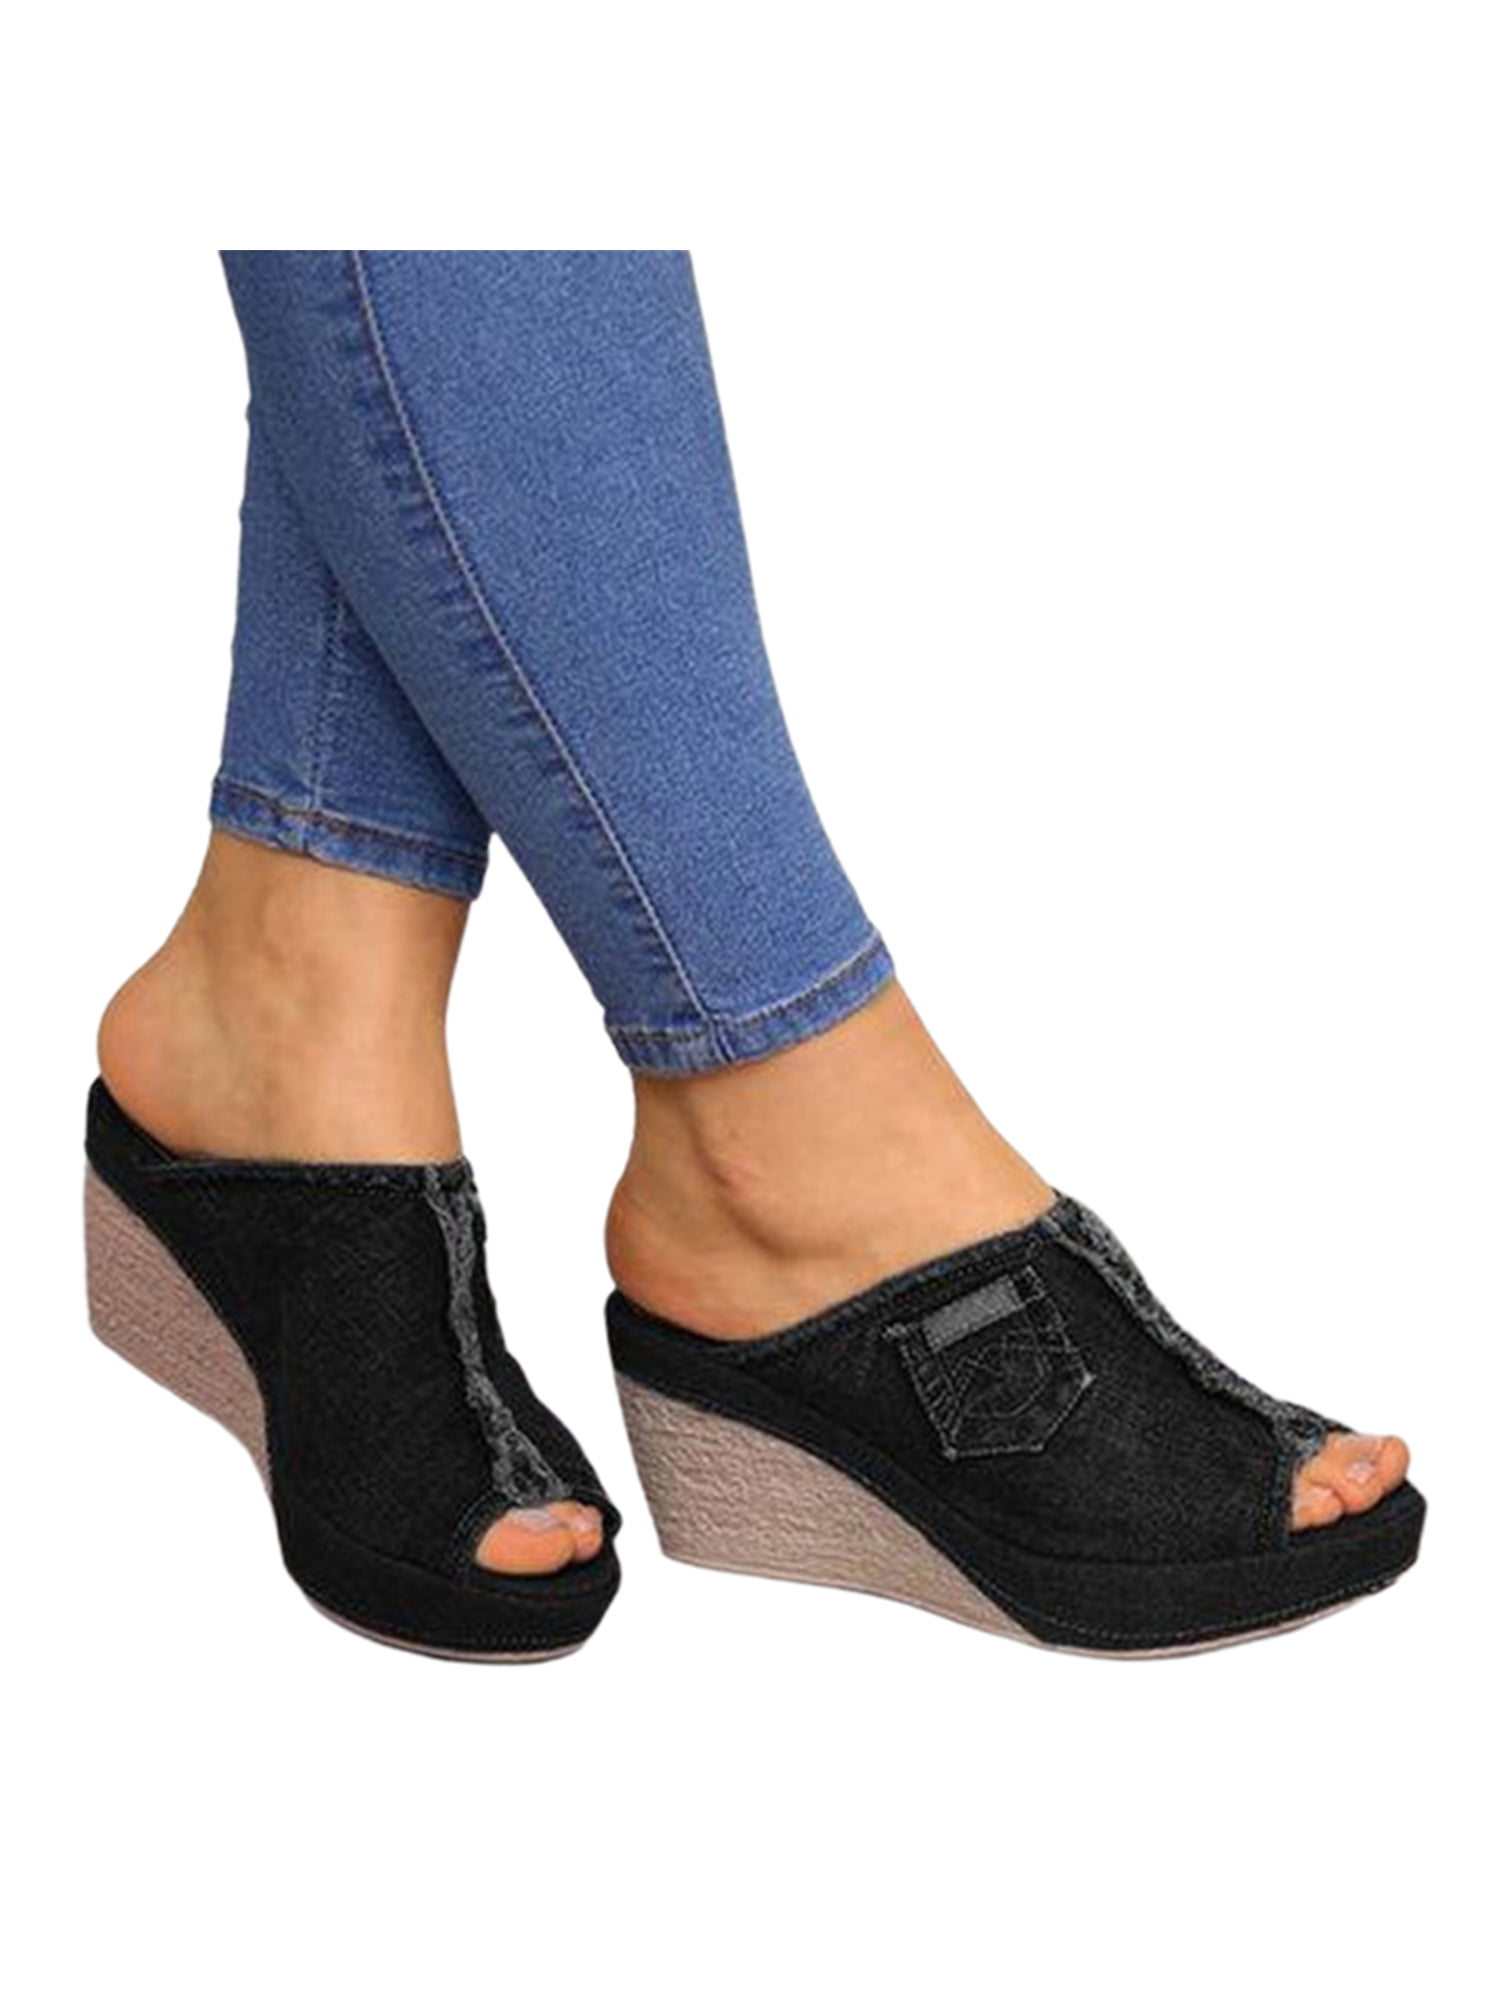 Crocowalk Female Lightweight Comfy Slip On Shoes Soft Wedge&platform ...